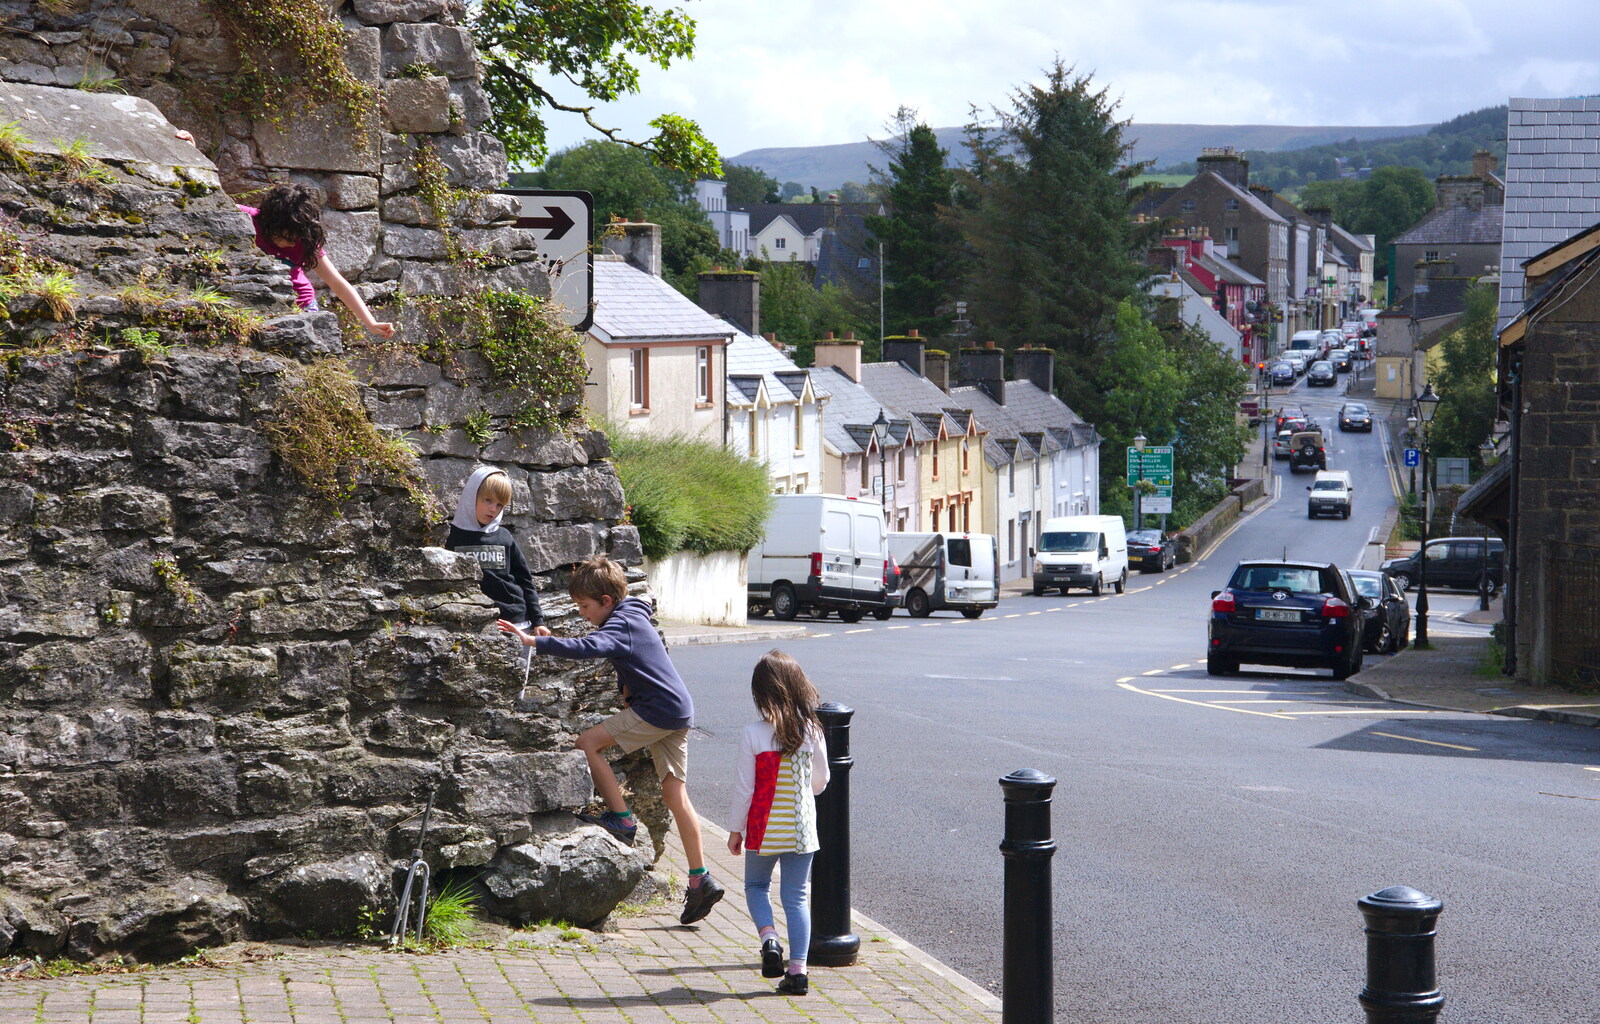 The children climb a wall on Castle Street from Open Mic Night, Bía Sláinte, Manorhamilton, Ireland - 17th August 2019